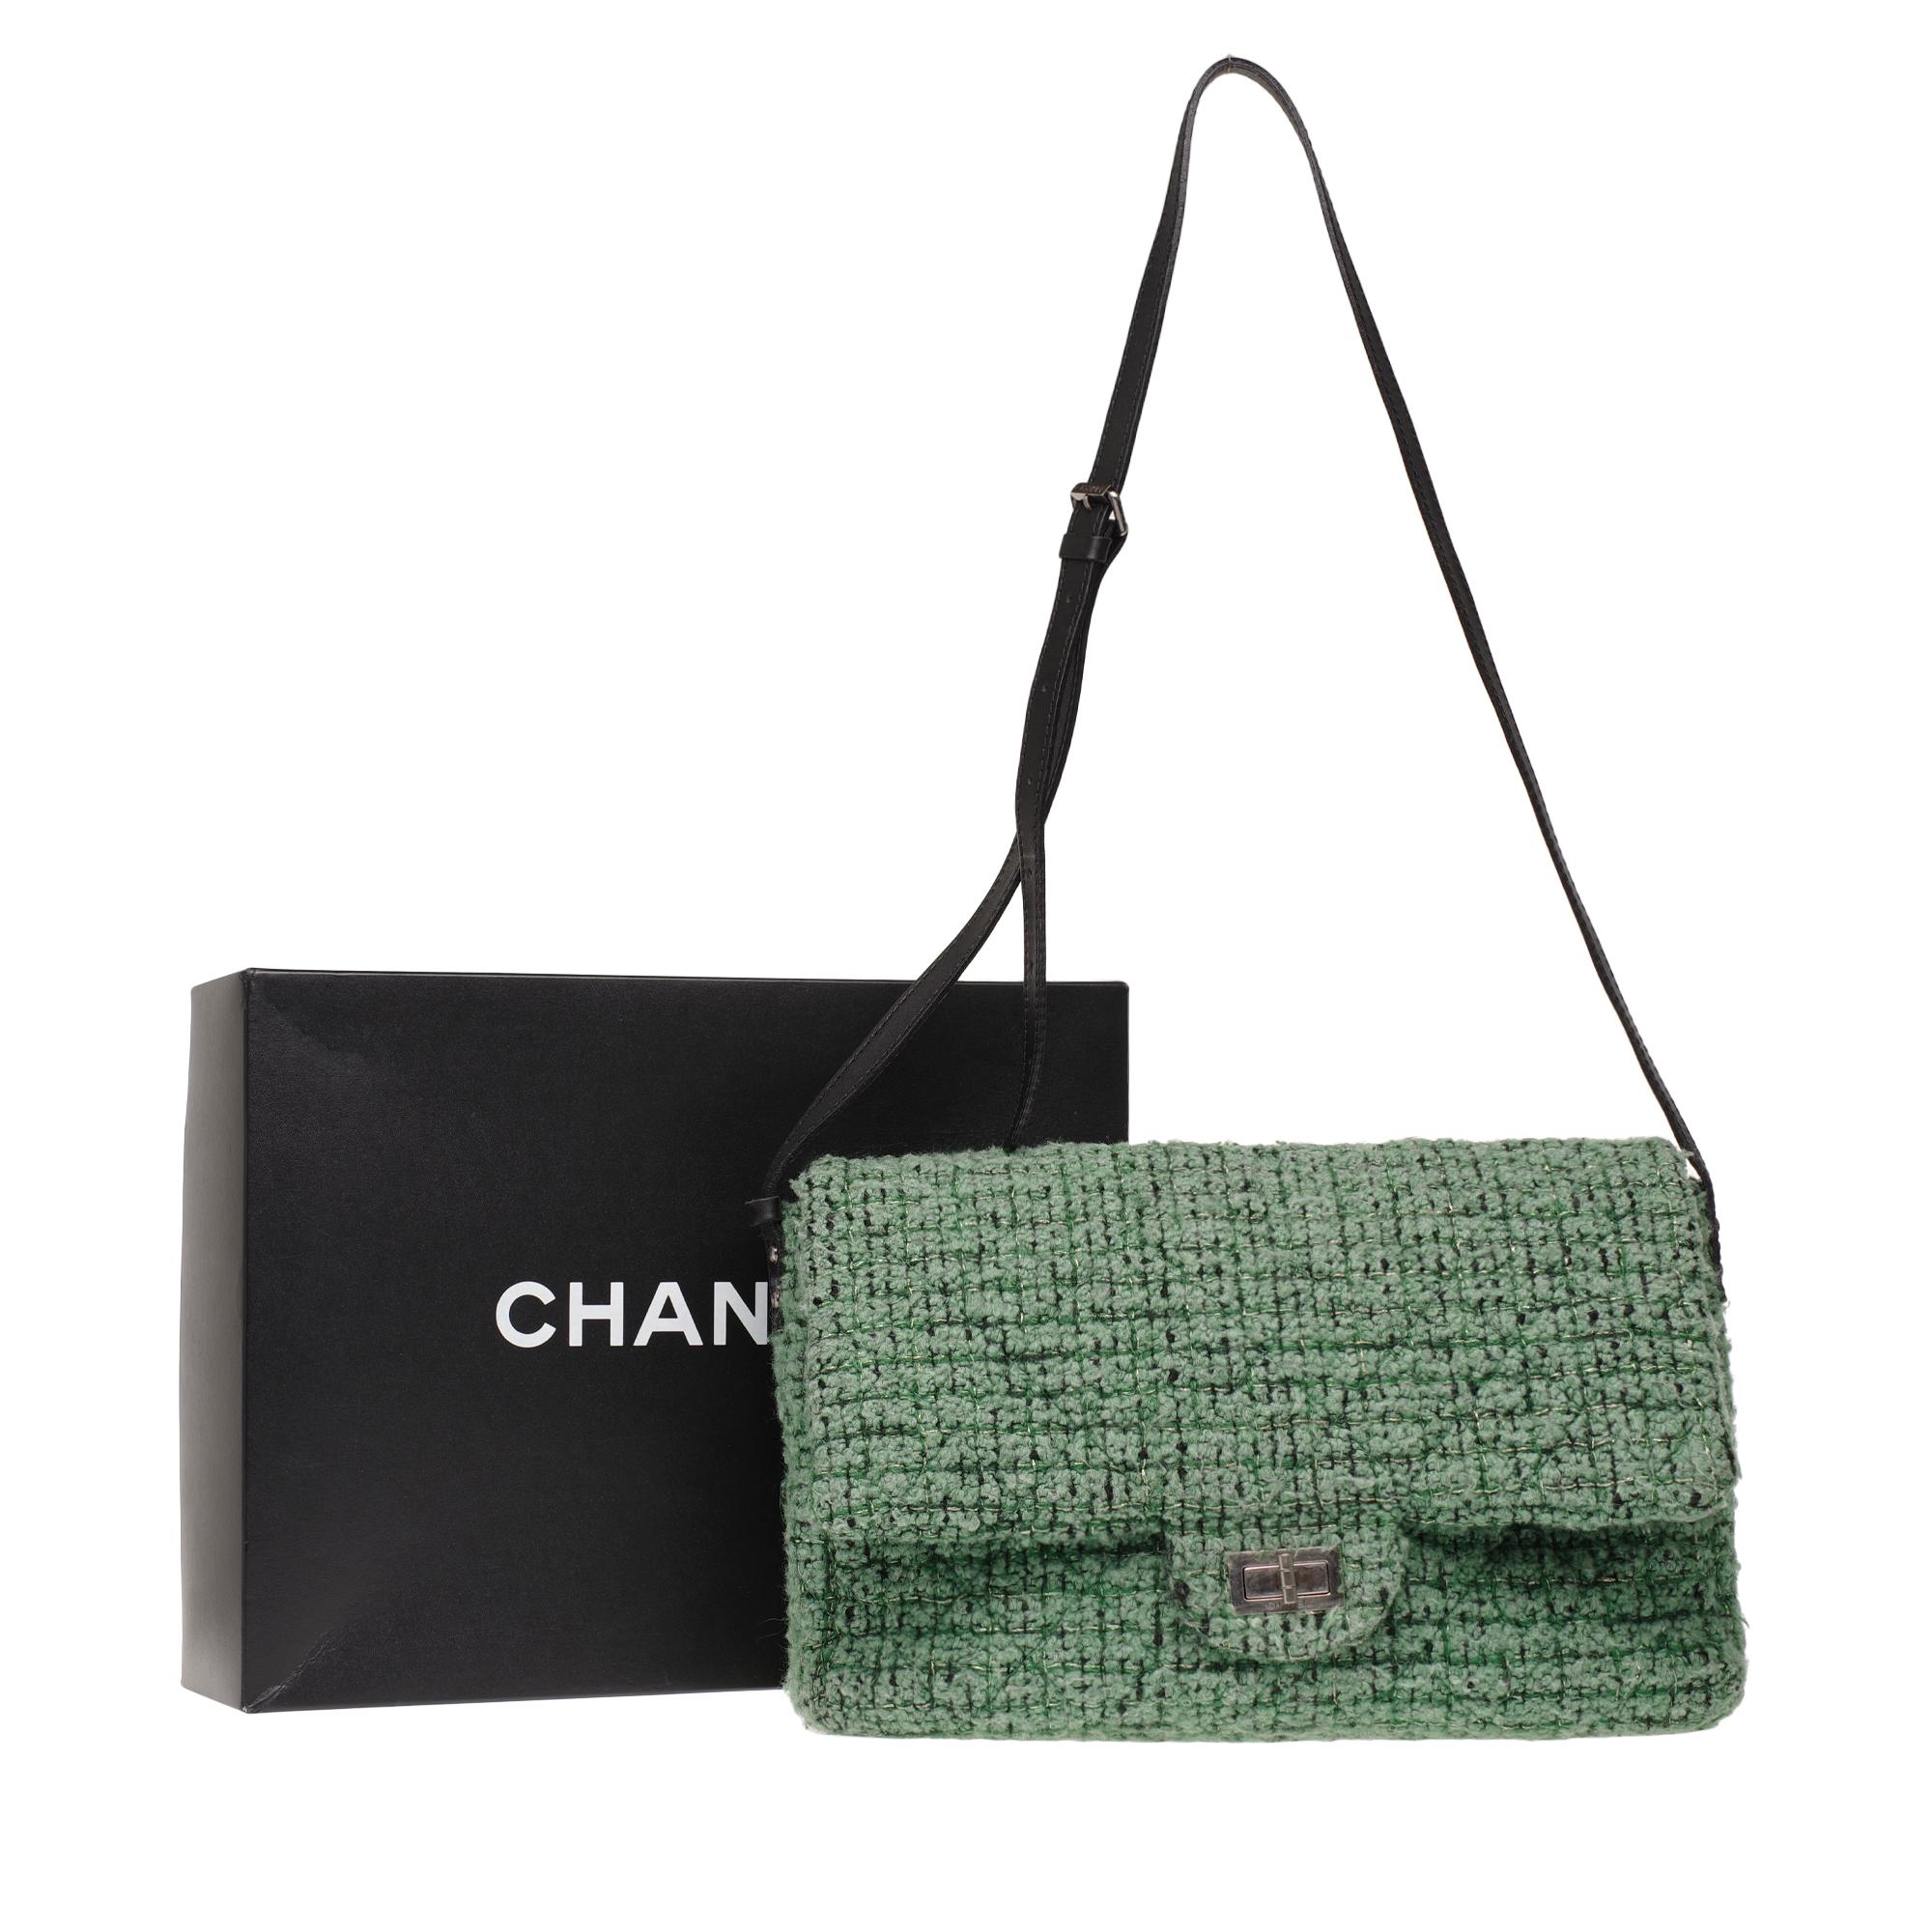 Stunning Large Chanel 2.55 handbag in green tweed and silver hardware 4